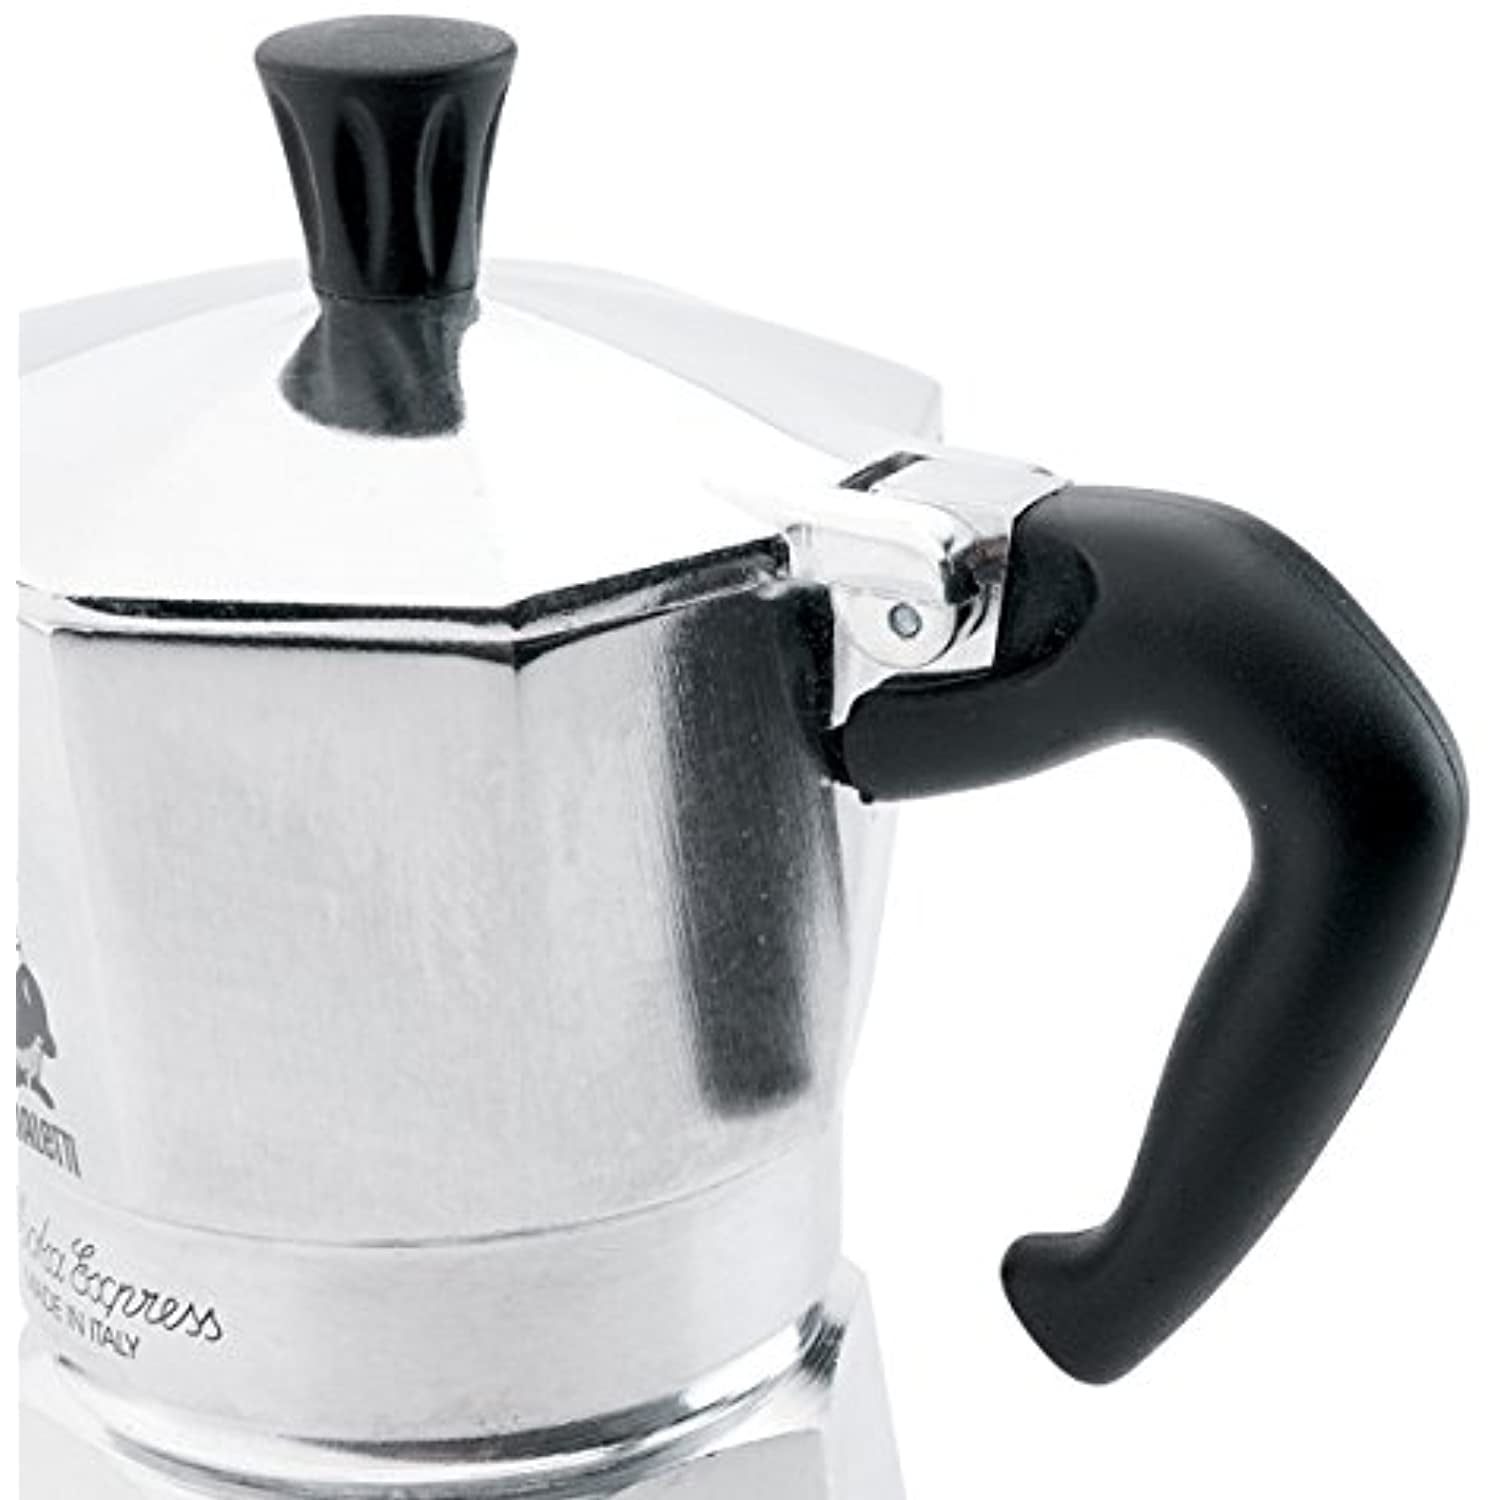 Bialetti Moka Express 9 cup Espresso Maker - Whisk